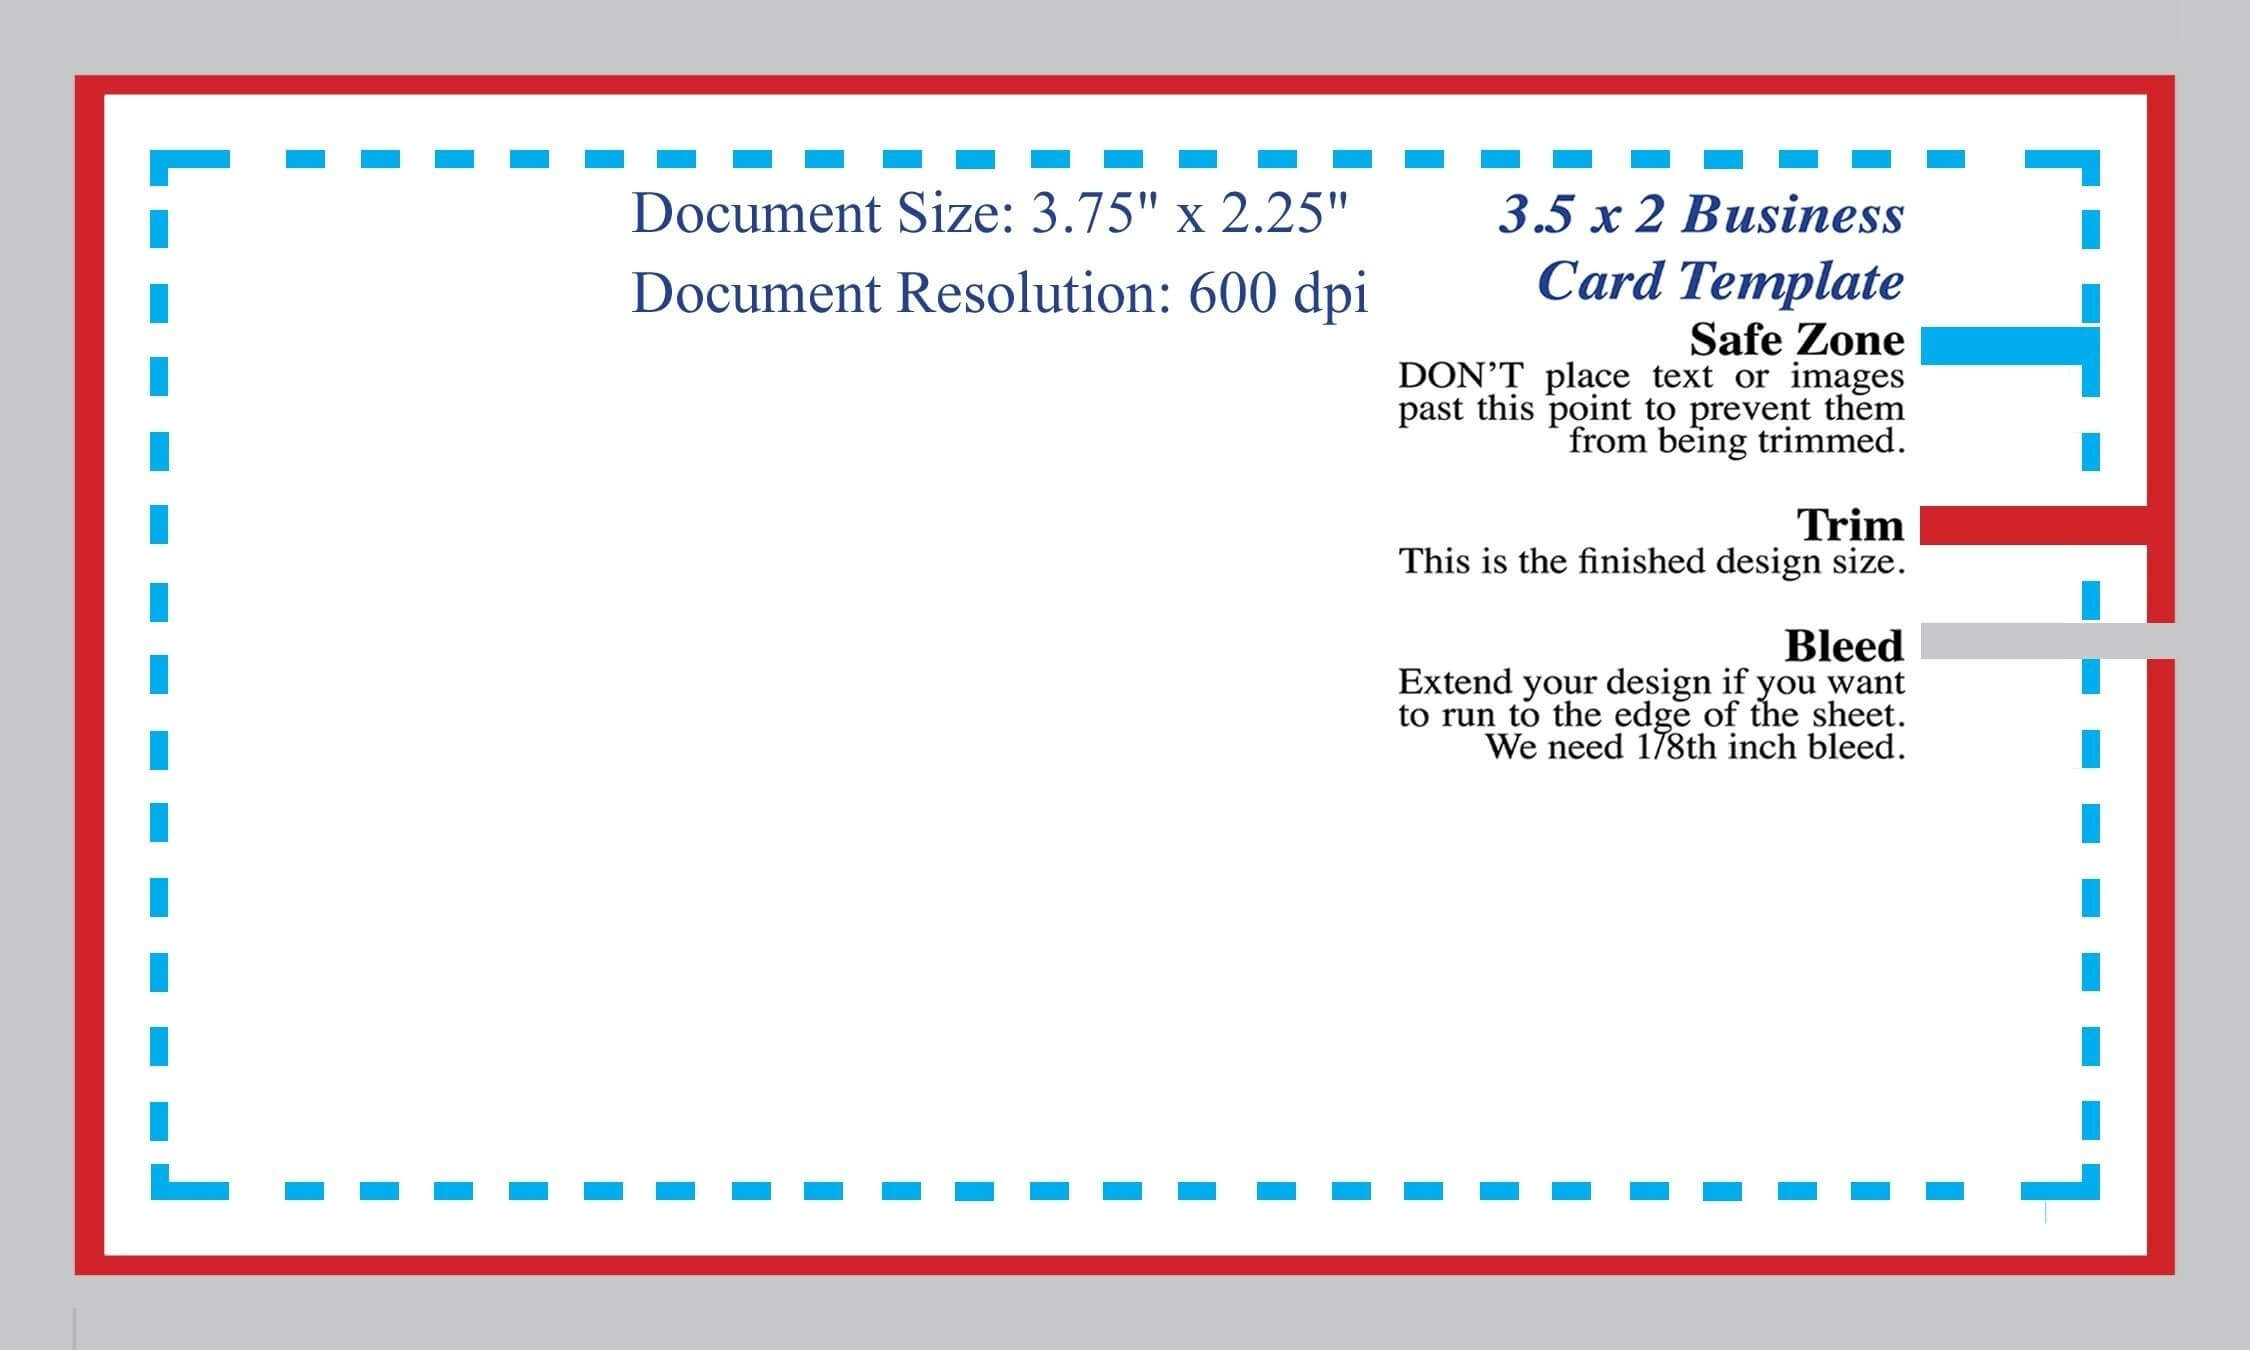 025 Blank Business Card Template Free Ideas Psd Photoshop Or Inside Blank Business Card Template Psd